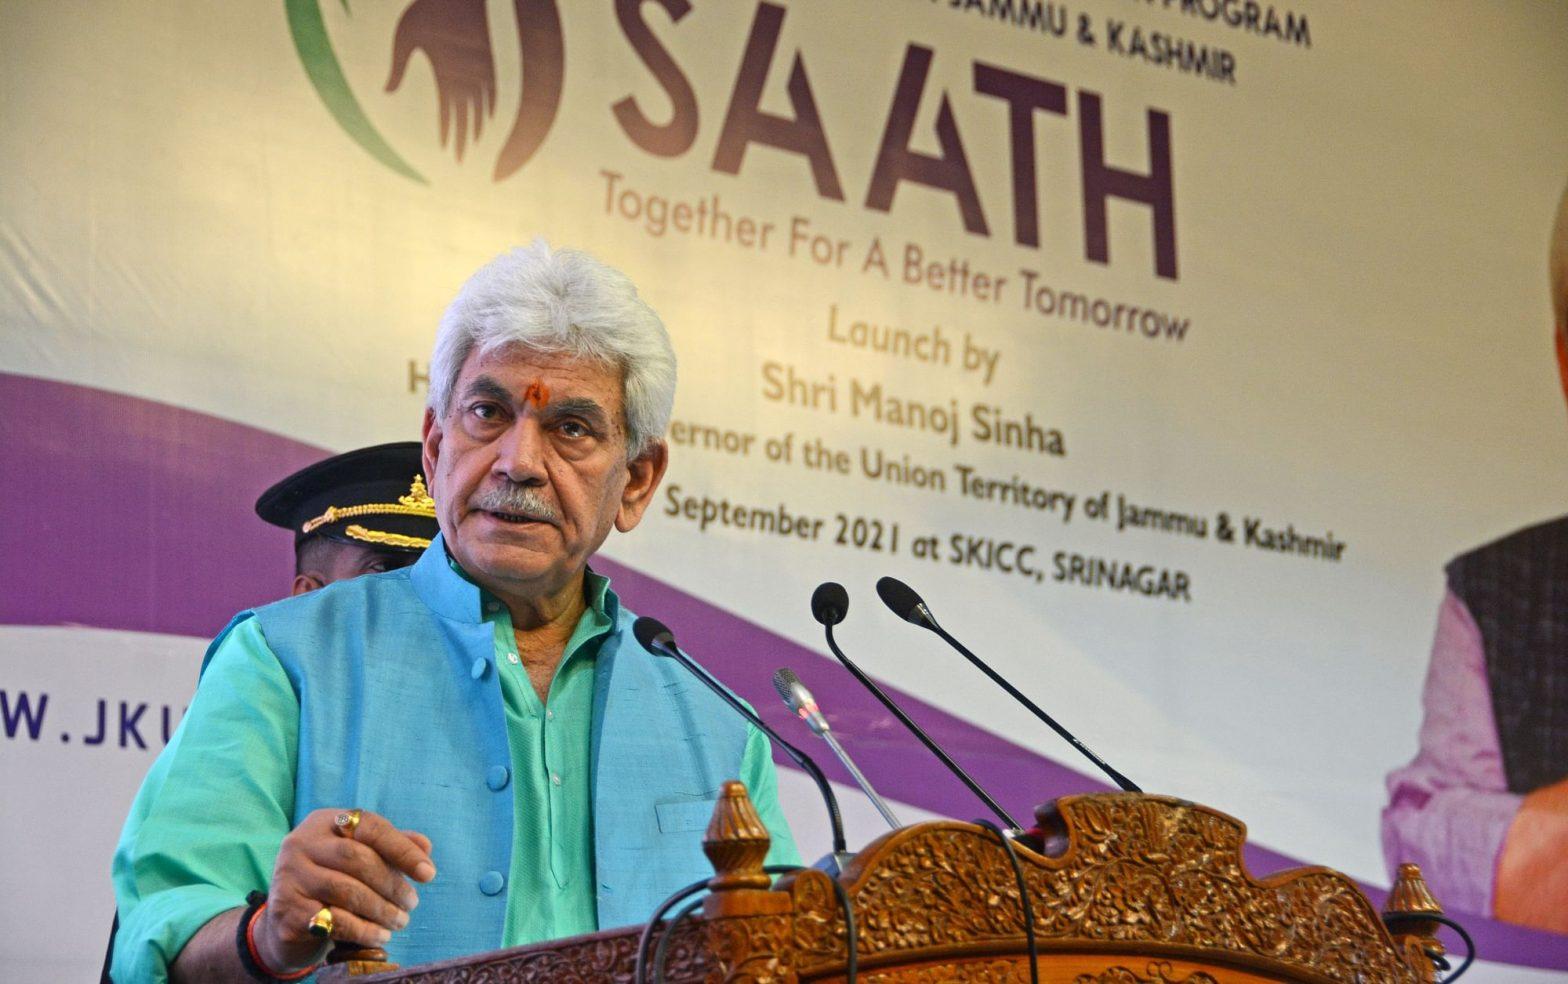 J&K LG Manoj Sinha inaugurates ‘Saath’ initiative for women